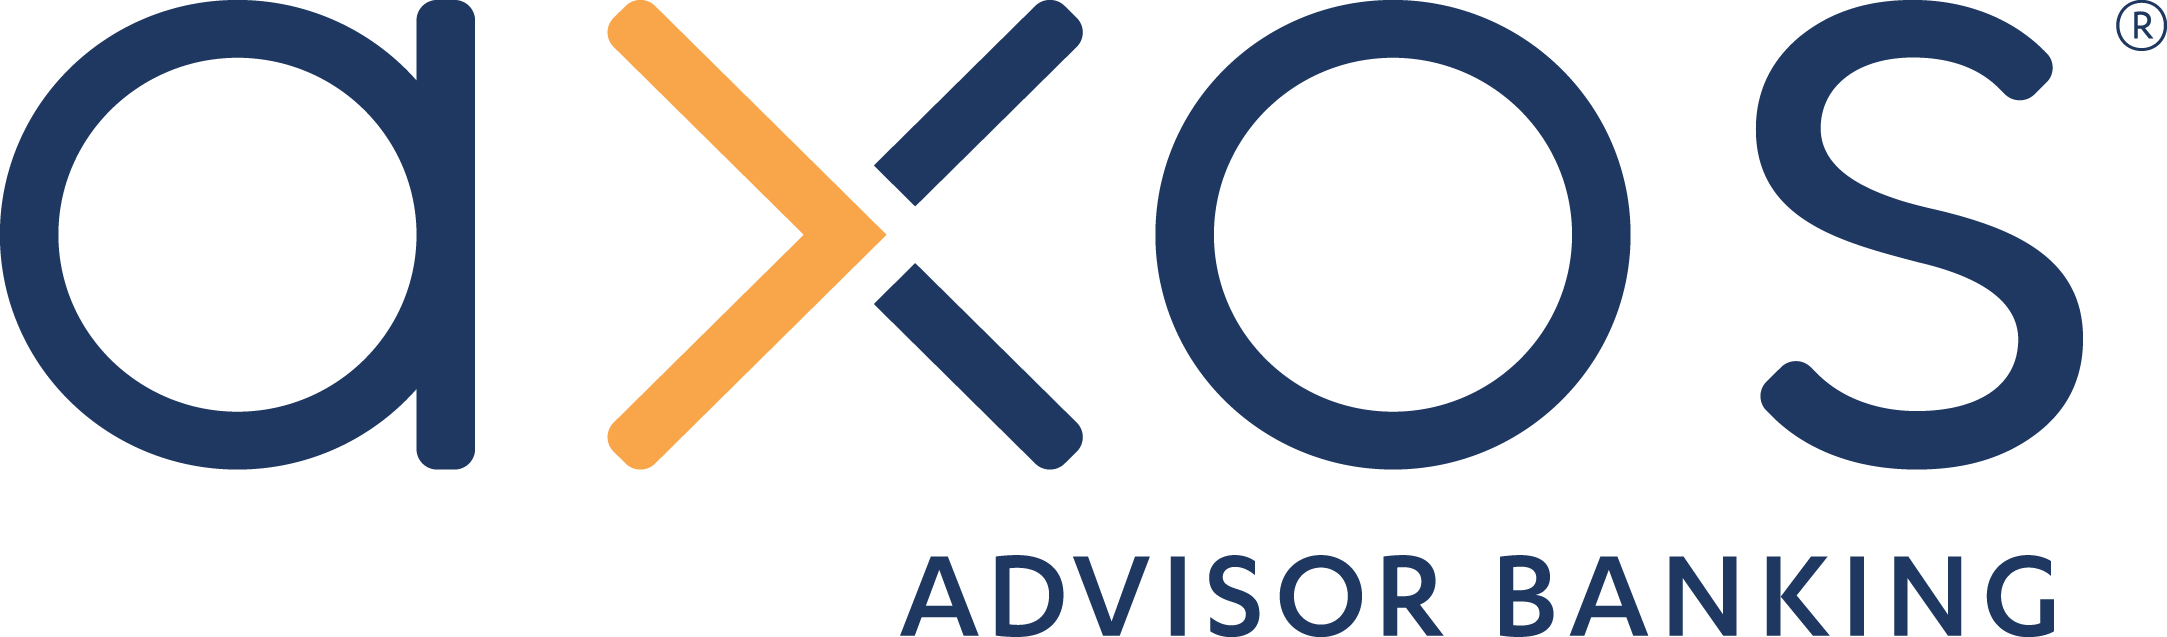 Axos Advisor Banking Home Page